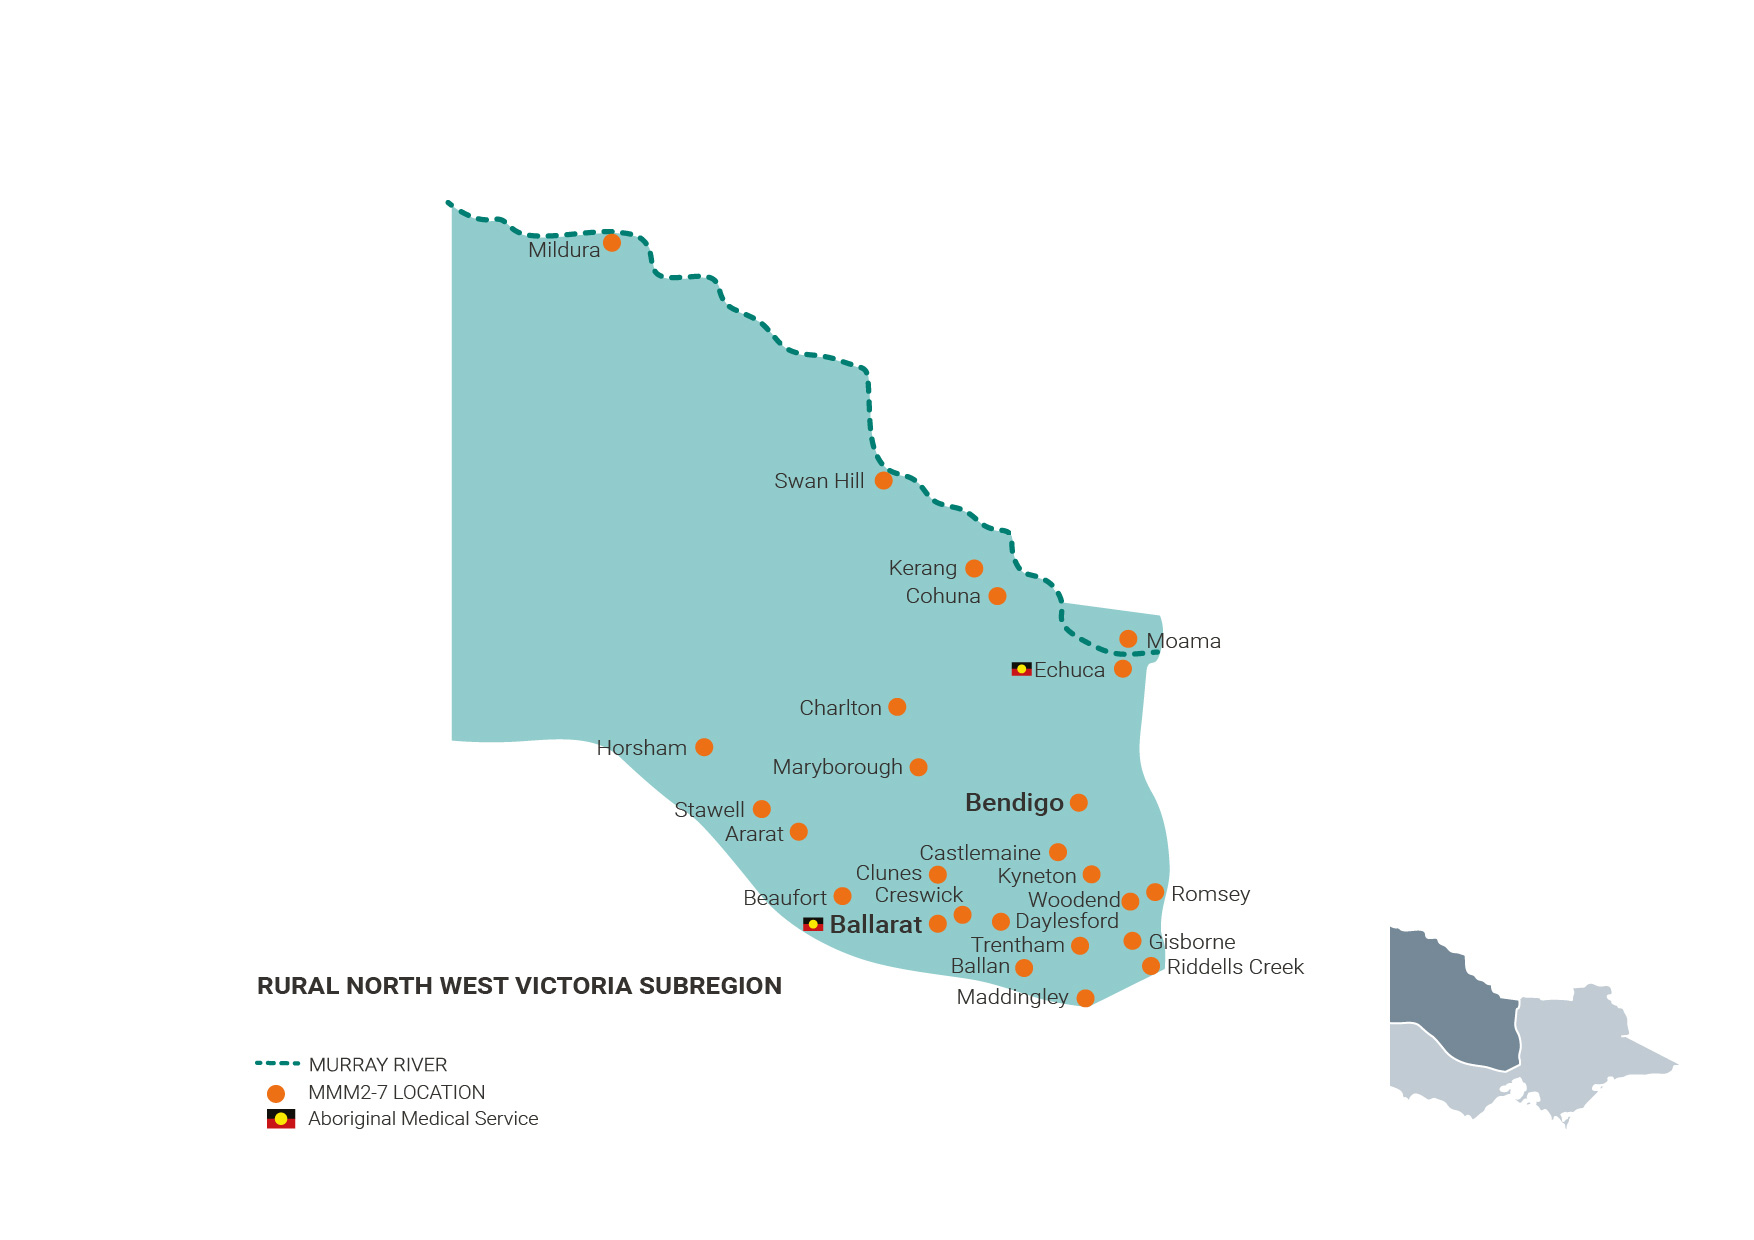 Rural North West Victoria subregion